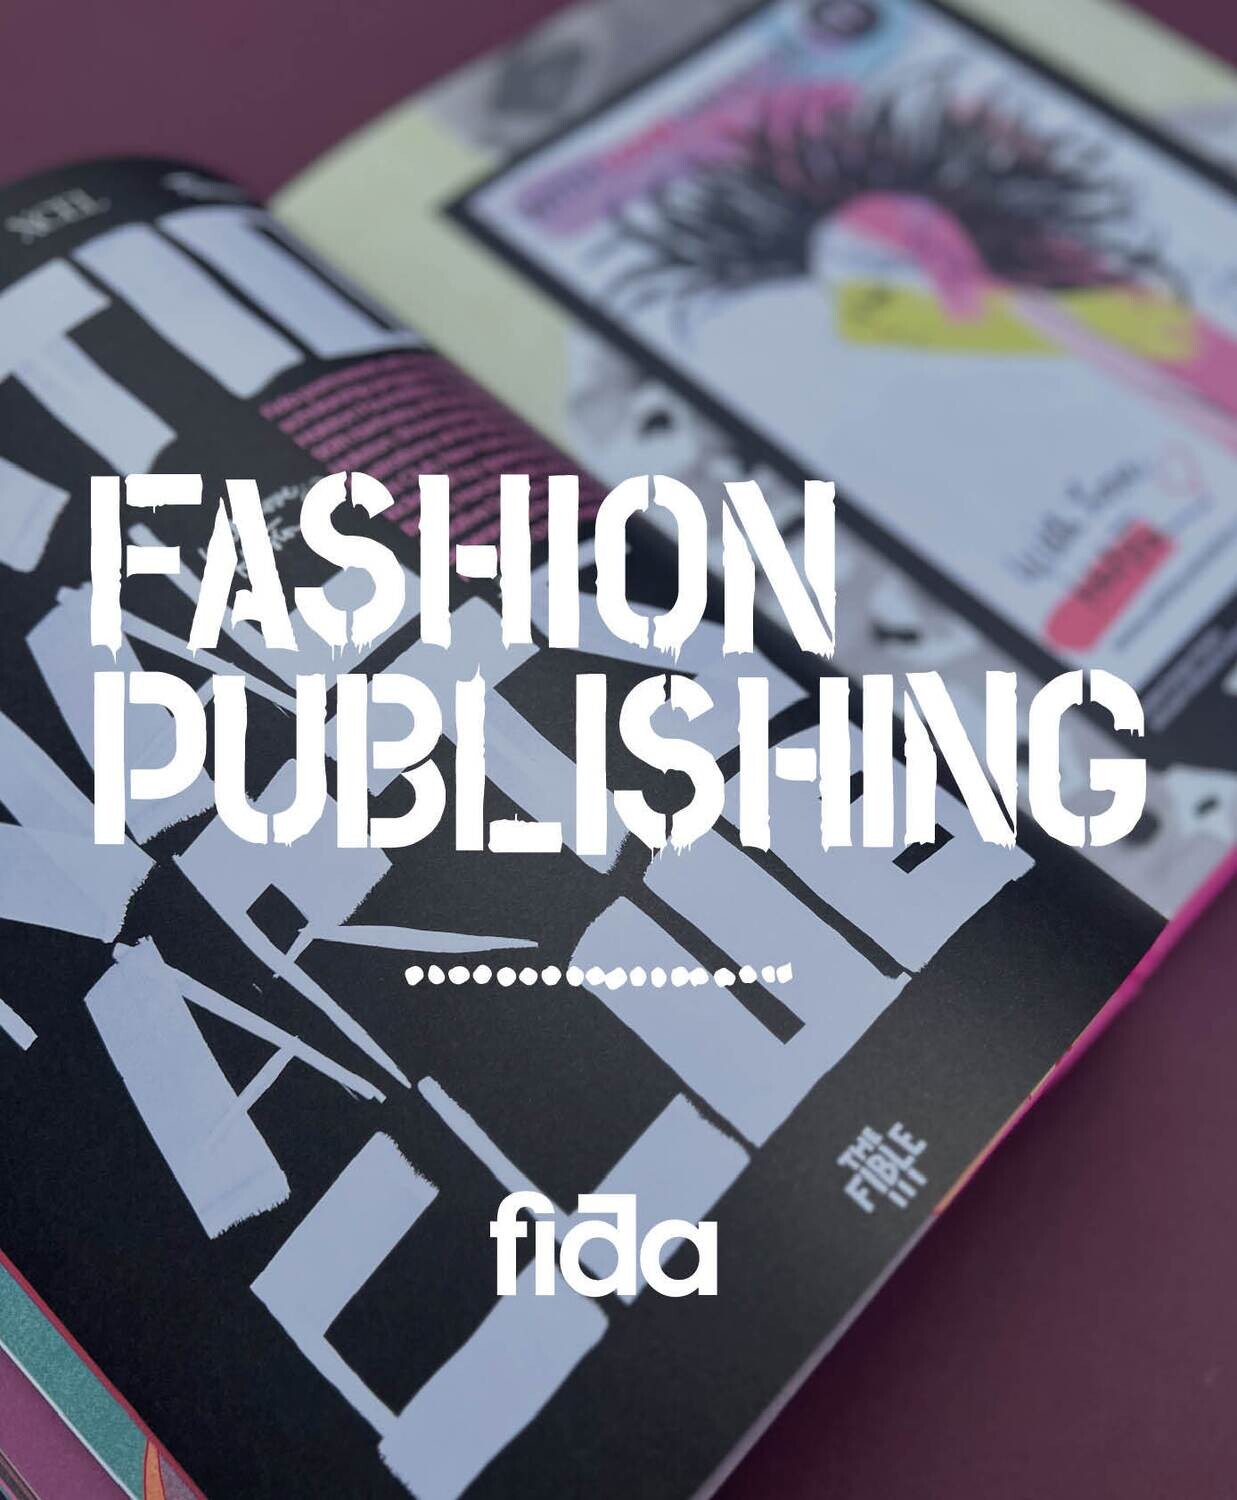 6 Month Fida Fashion Publishing course